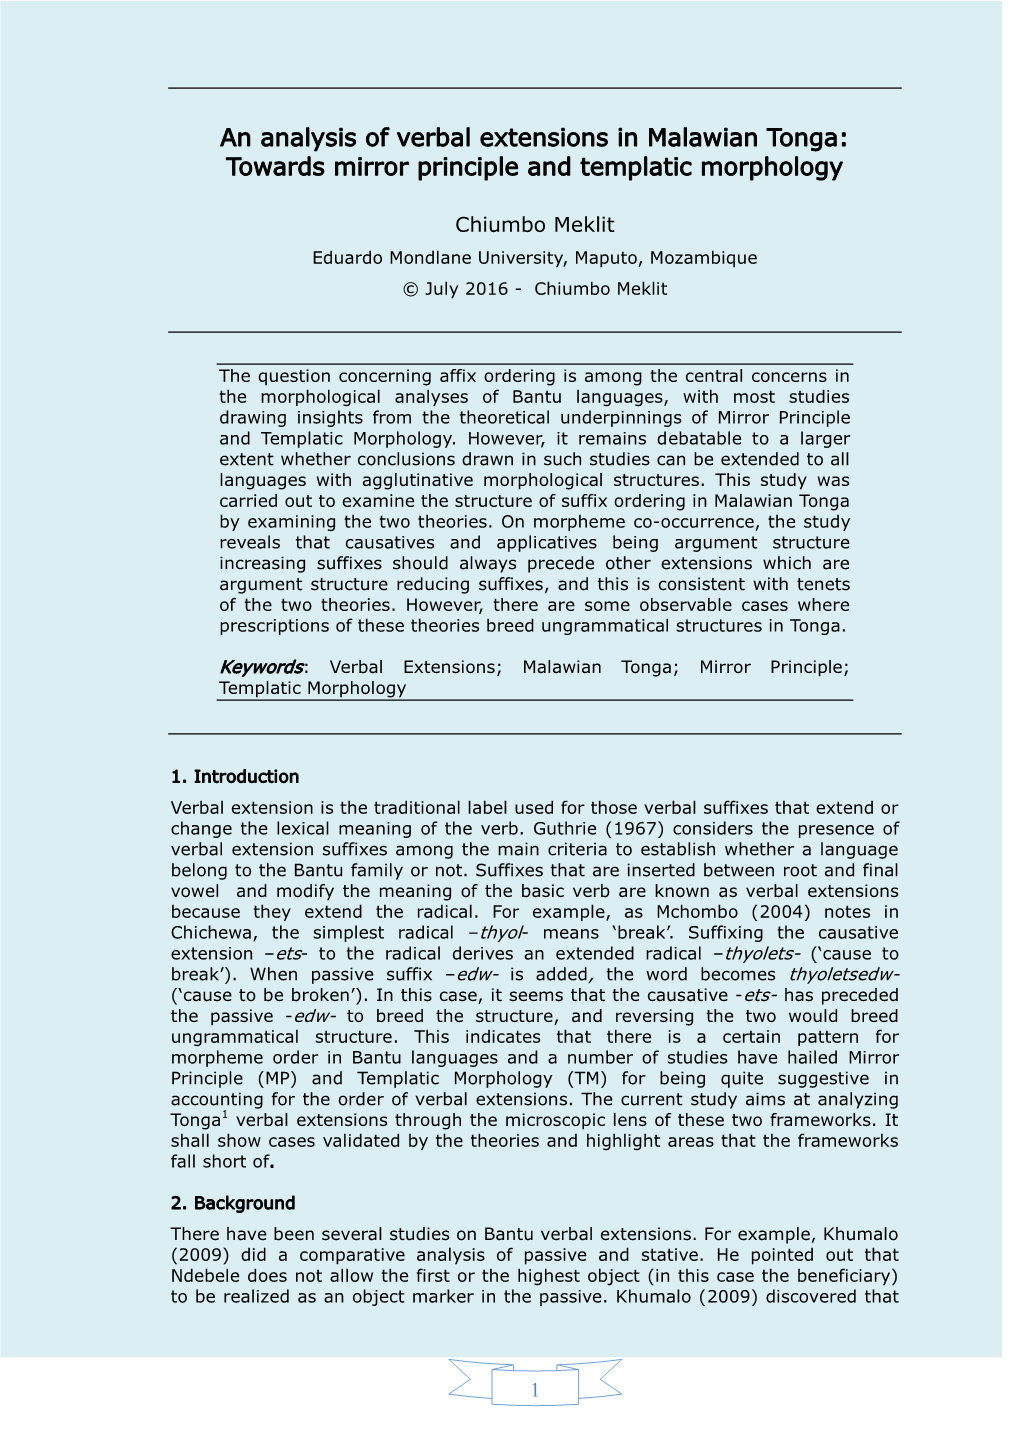 An Analysis of Verbal Extensions in Malawian Tonga: Towards Mirror Principle and Templatic Morphology